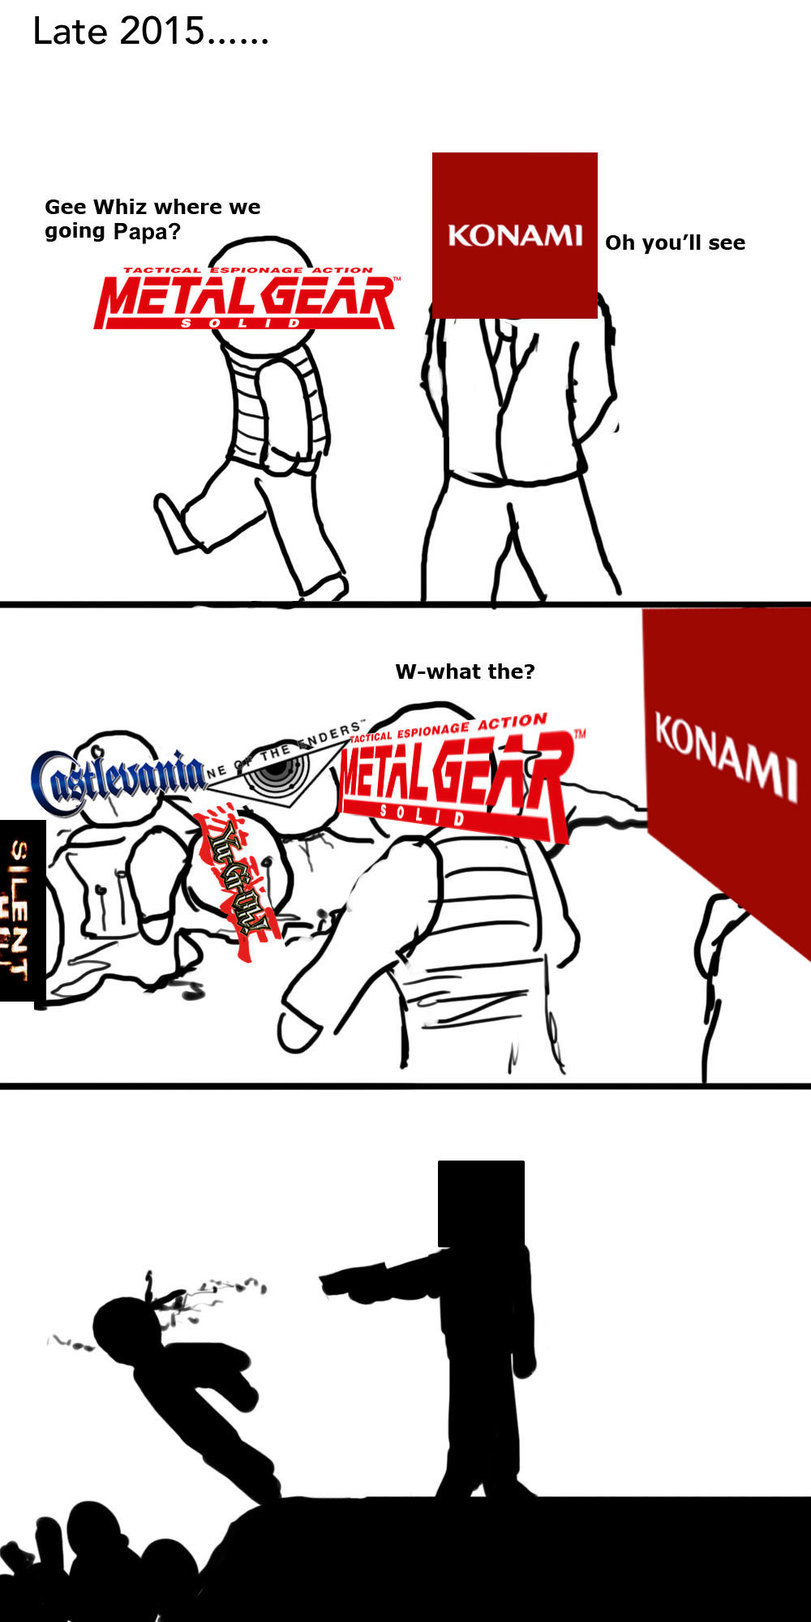 why you do this Konami - meme